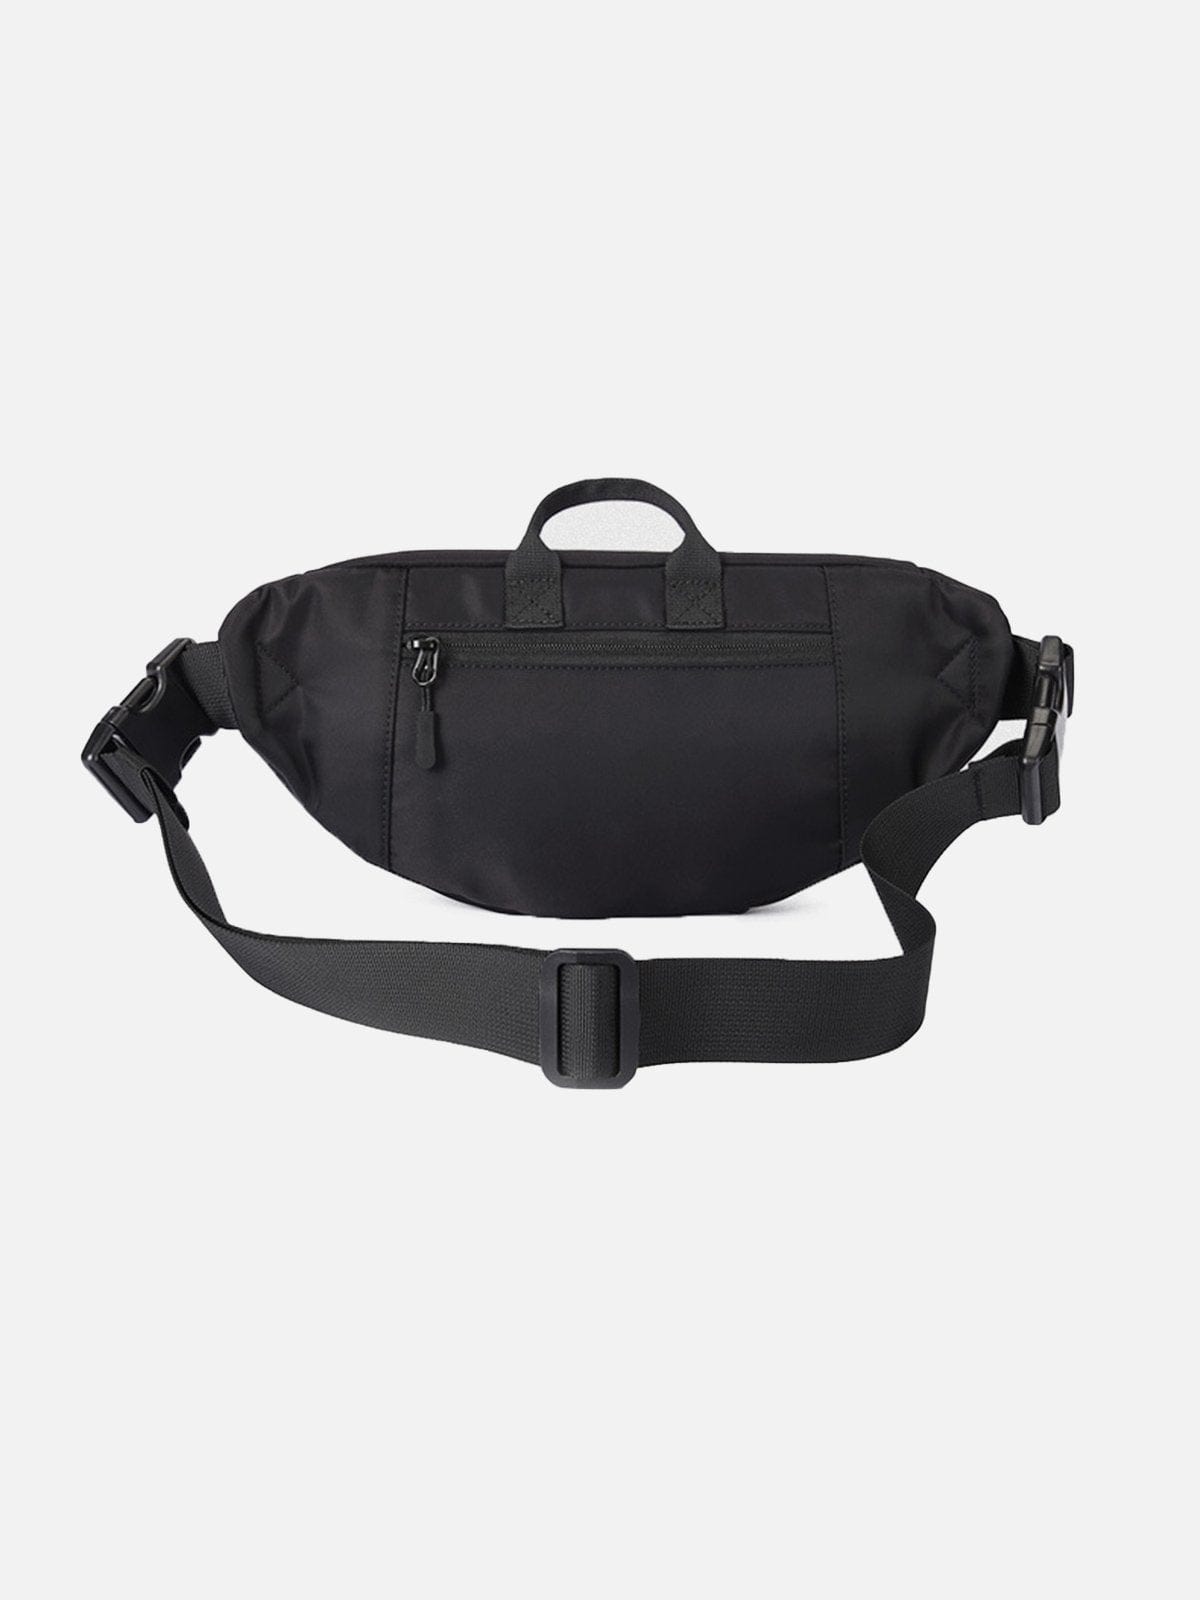 NEV Functional Style Messenger Bag